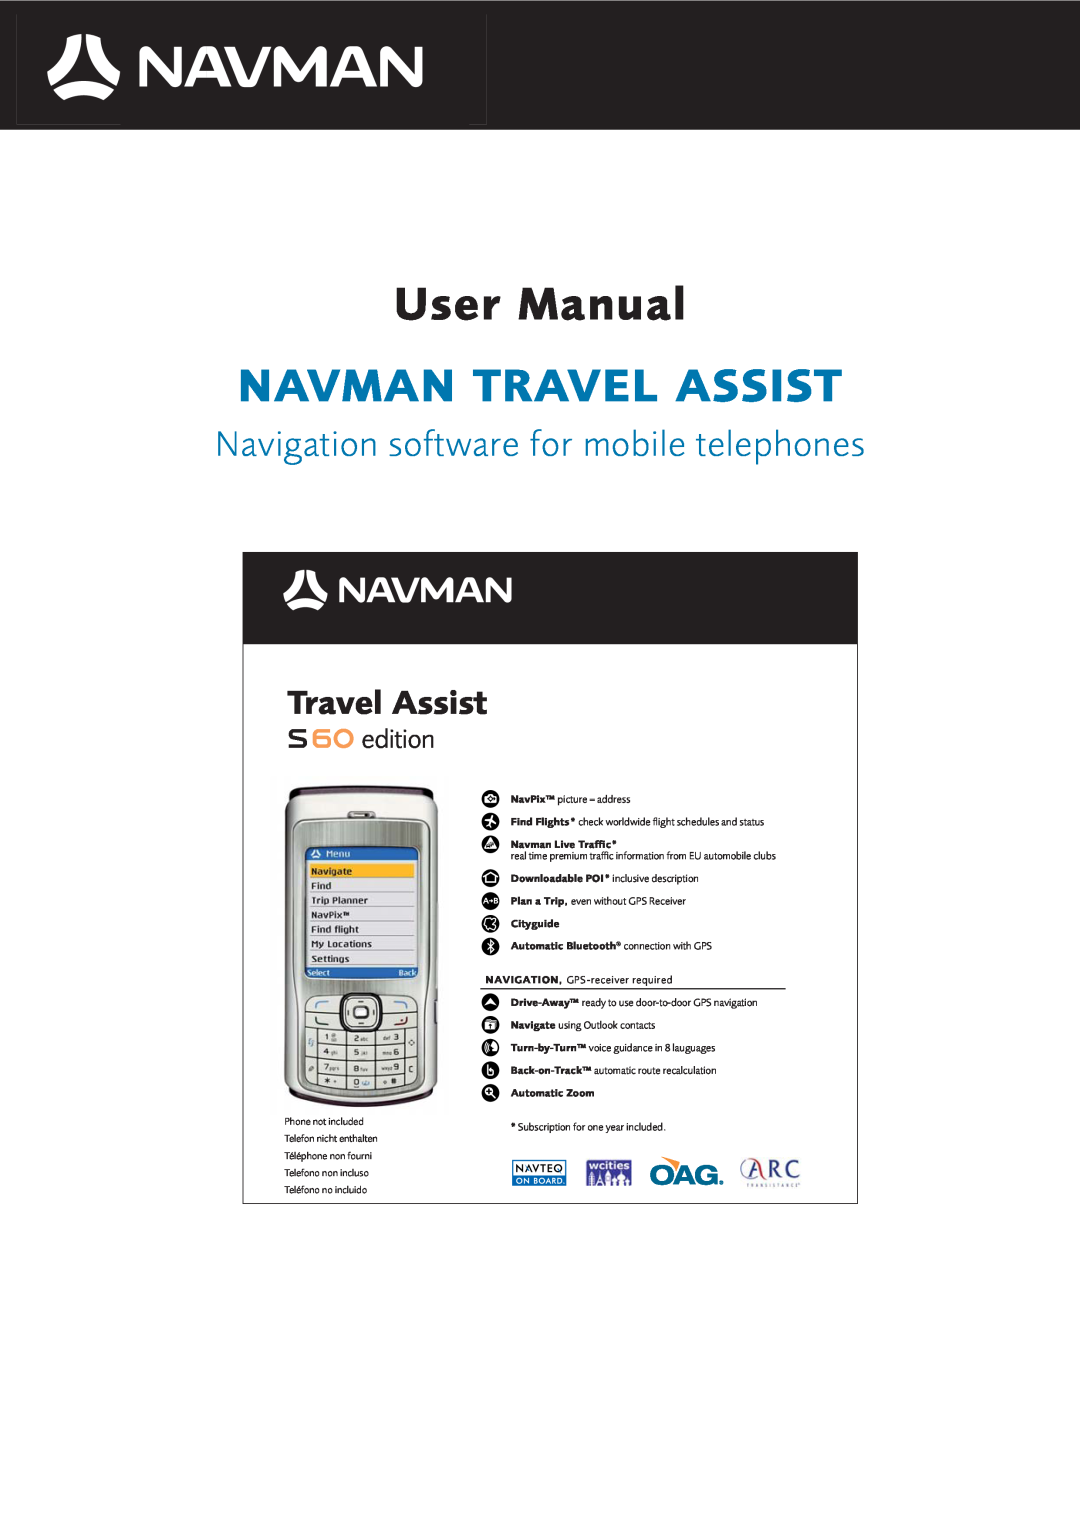 Navman user manual User Manual, Navman Travel Assist, Navigation software for mobile telephones, S60 edition 